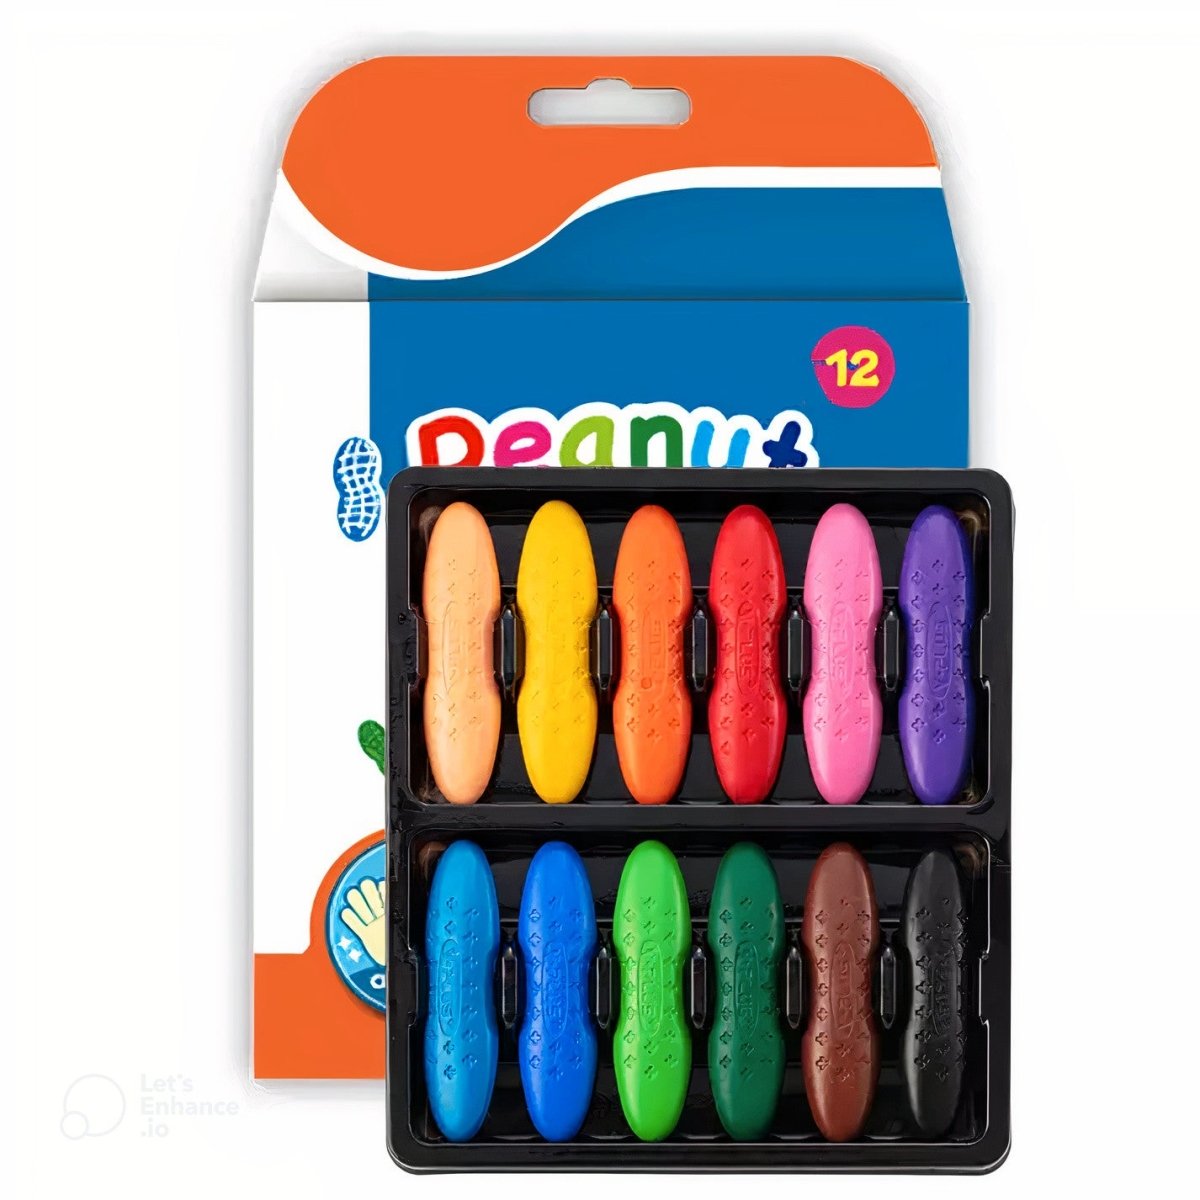 Peanut Crayons Drawing Set (12 pieces)